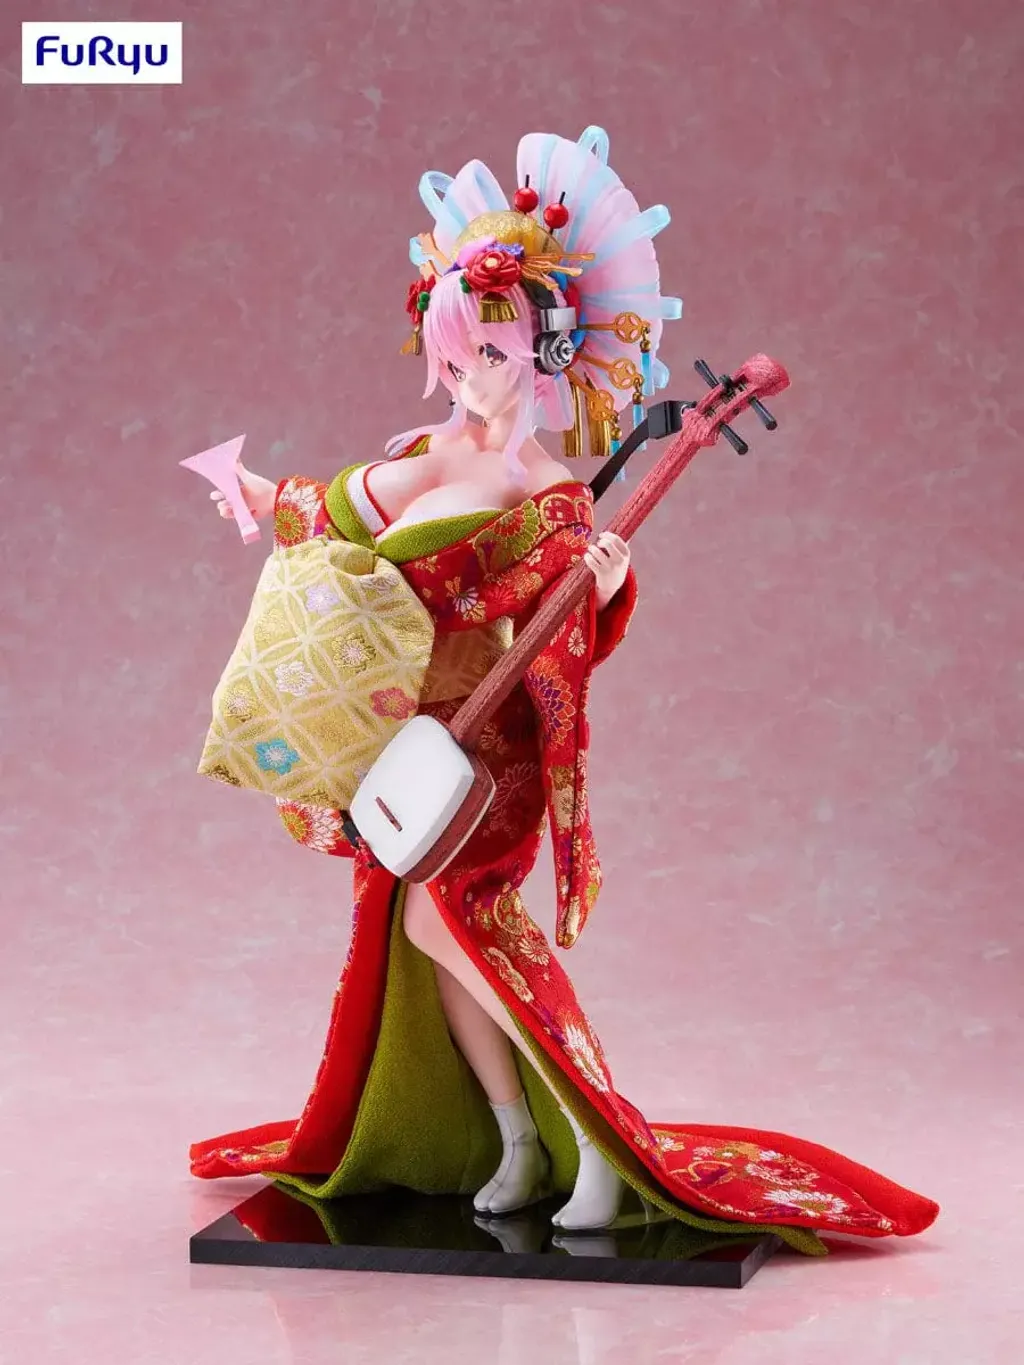 super-sonico-japanese-doll-1-4-scale-figure-furyu-corporation-41215653708007_5000x